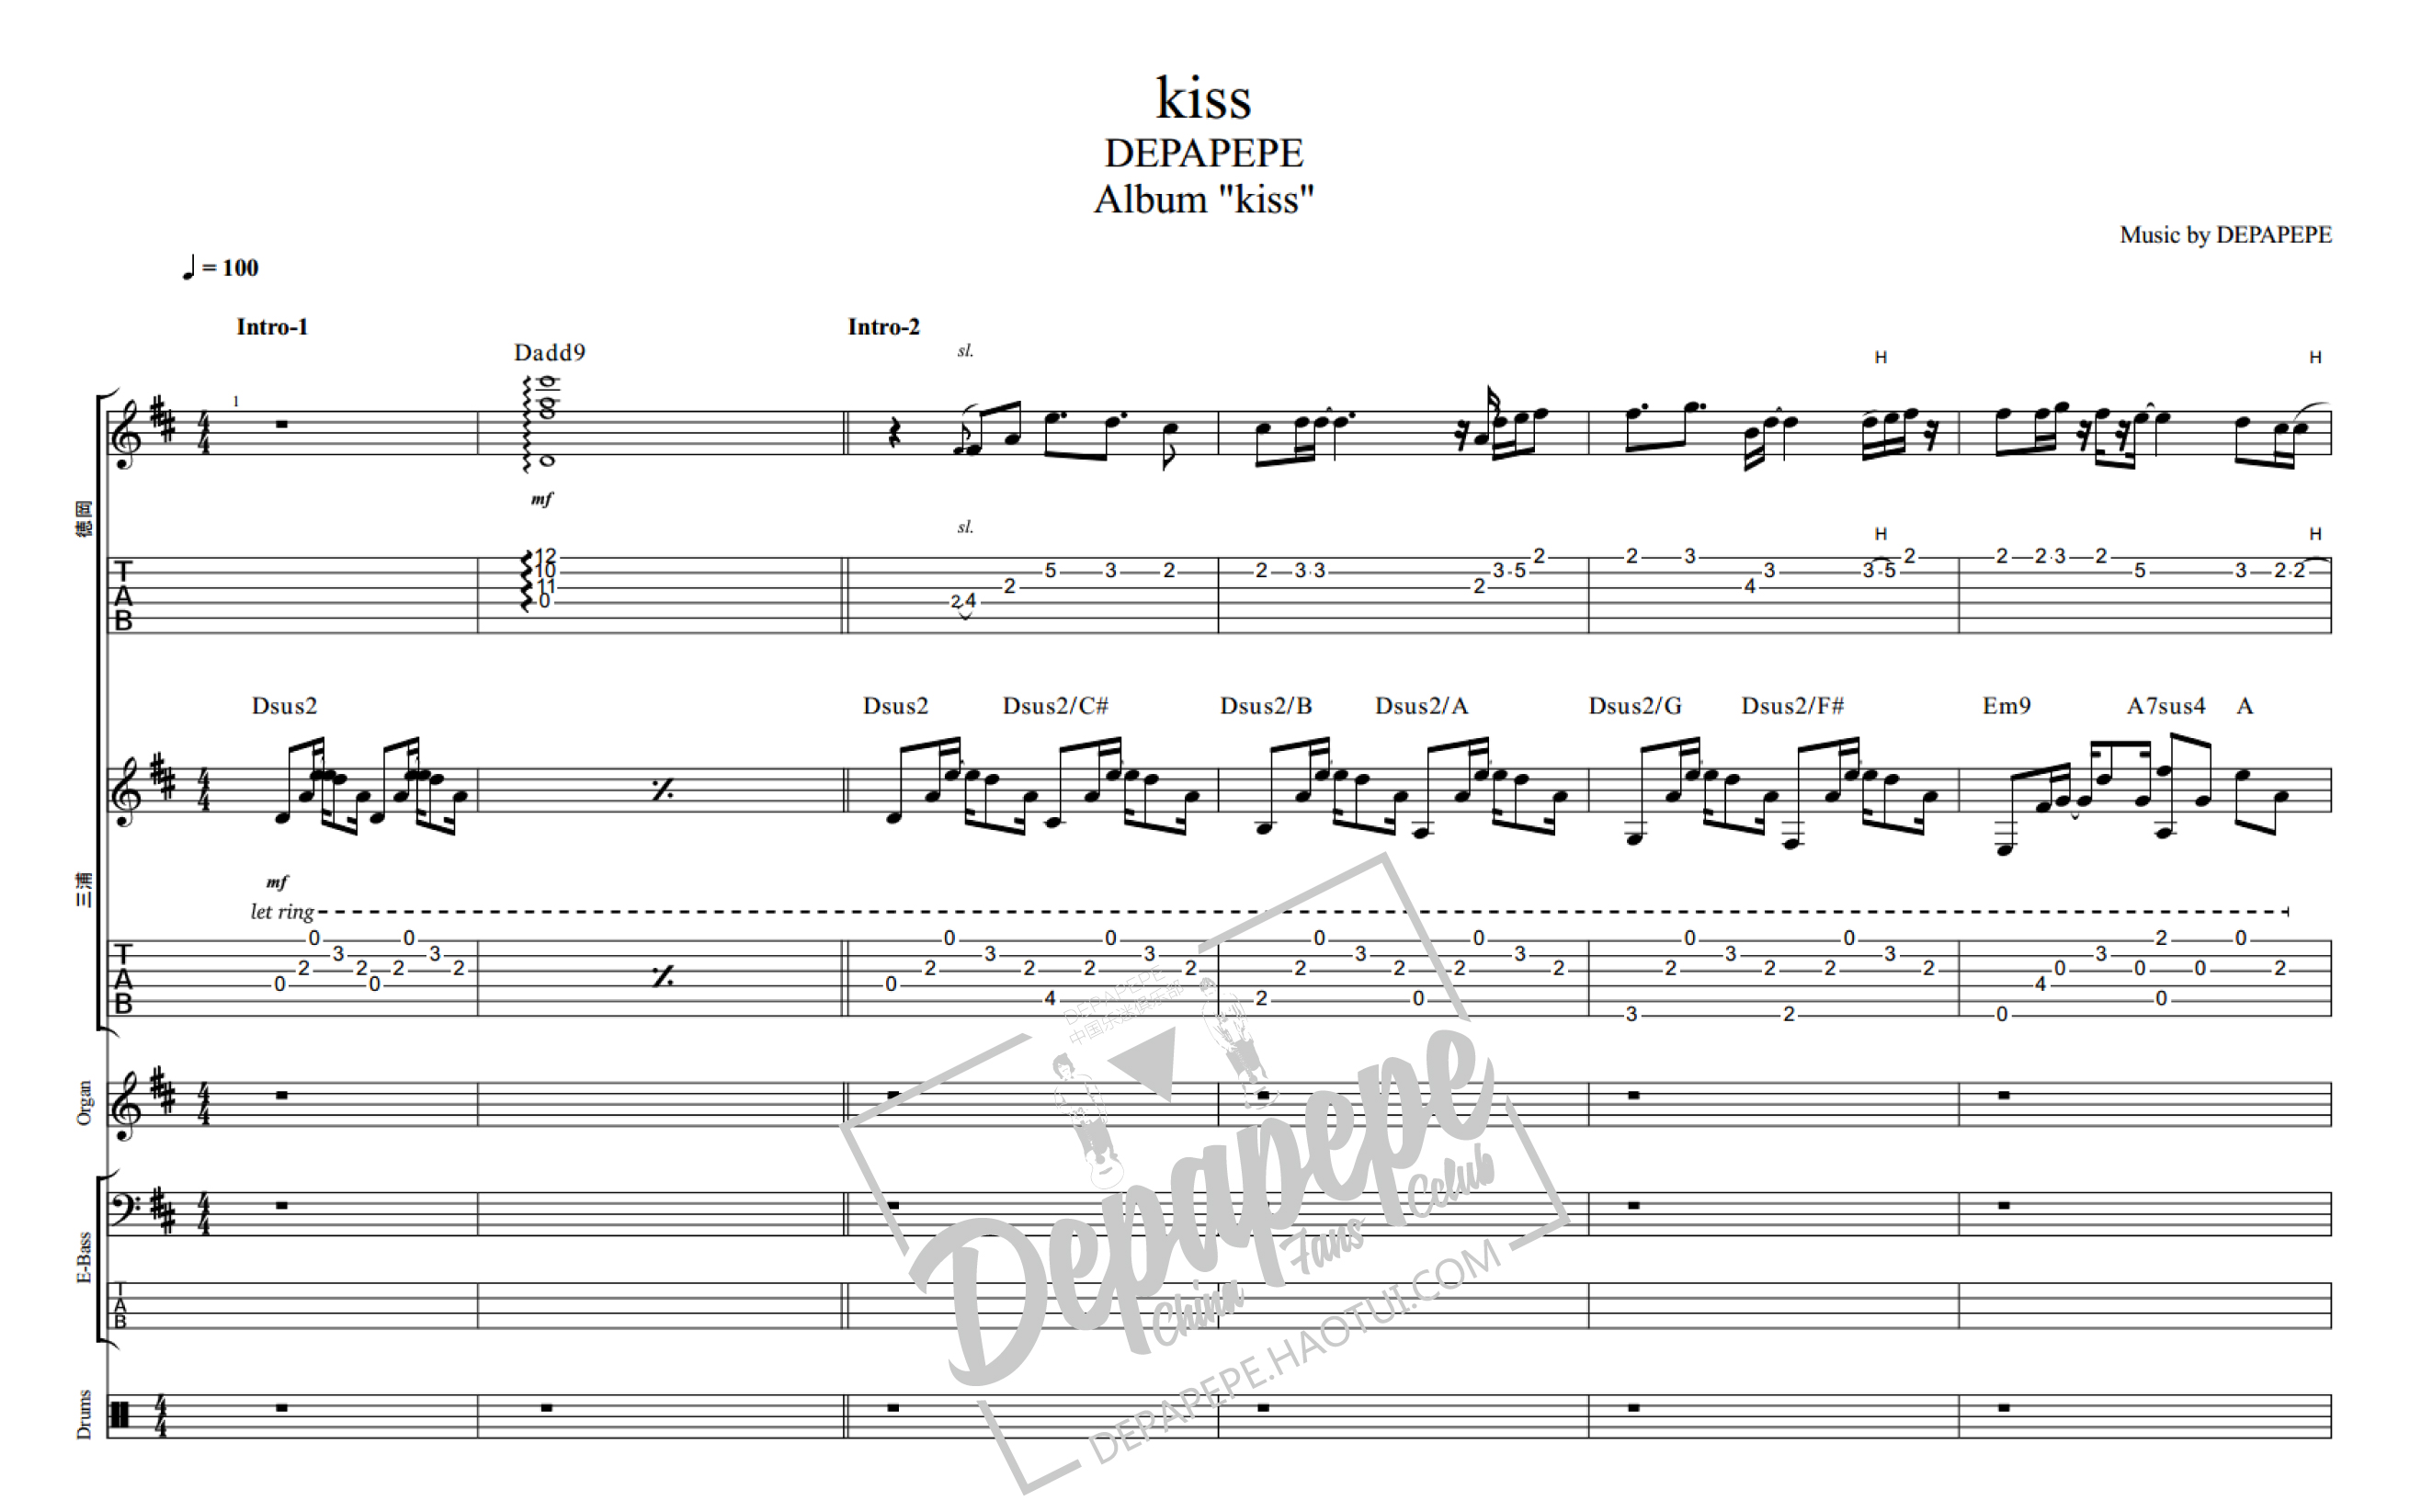 Kiss吉他谱(图片谱,kiss原谱,大神可以八成GTP的)_Depapepe(デパペペ;空心吉他)_1.jpg